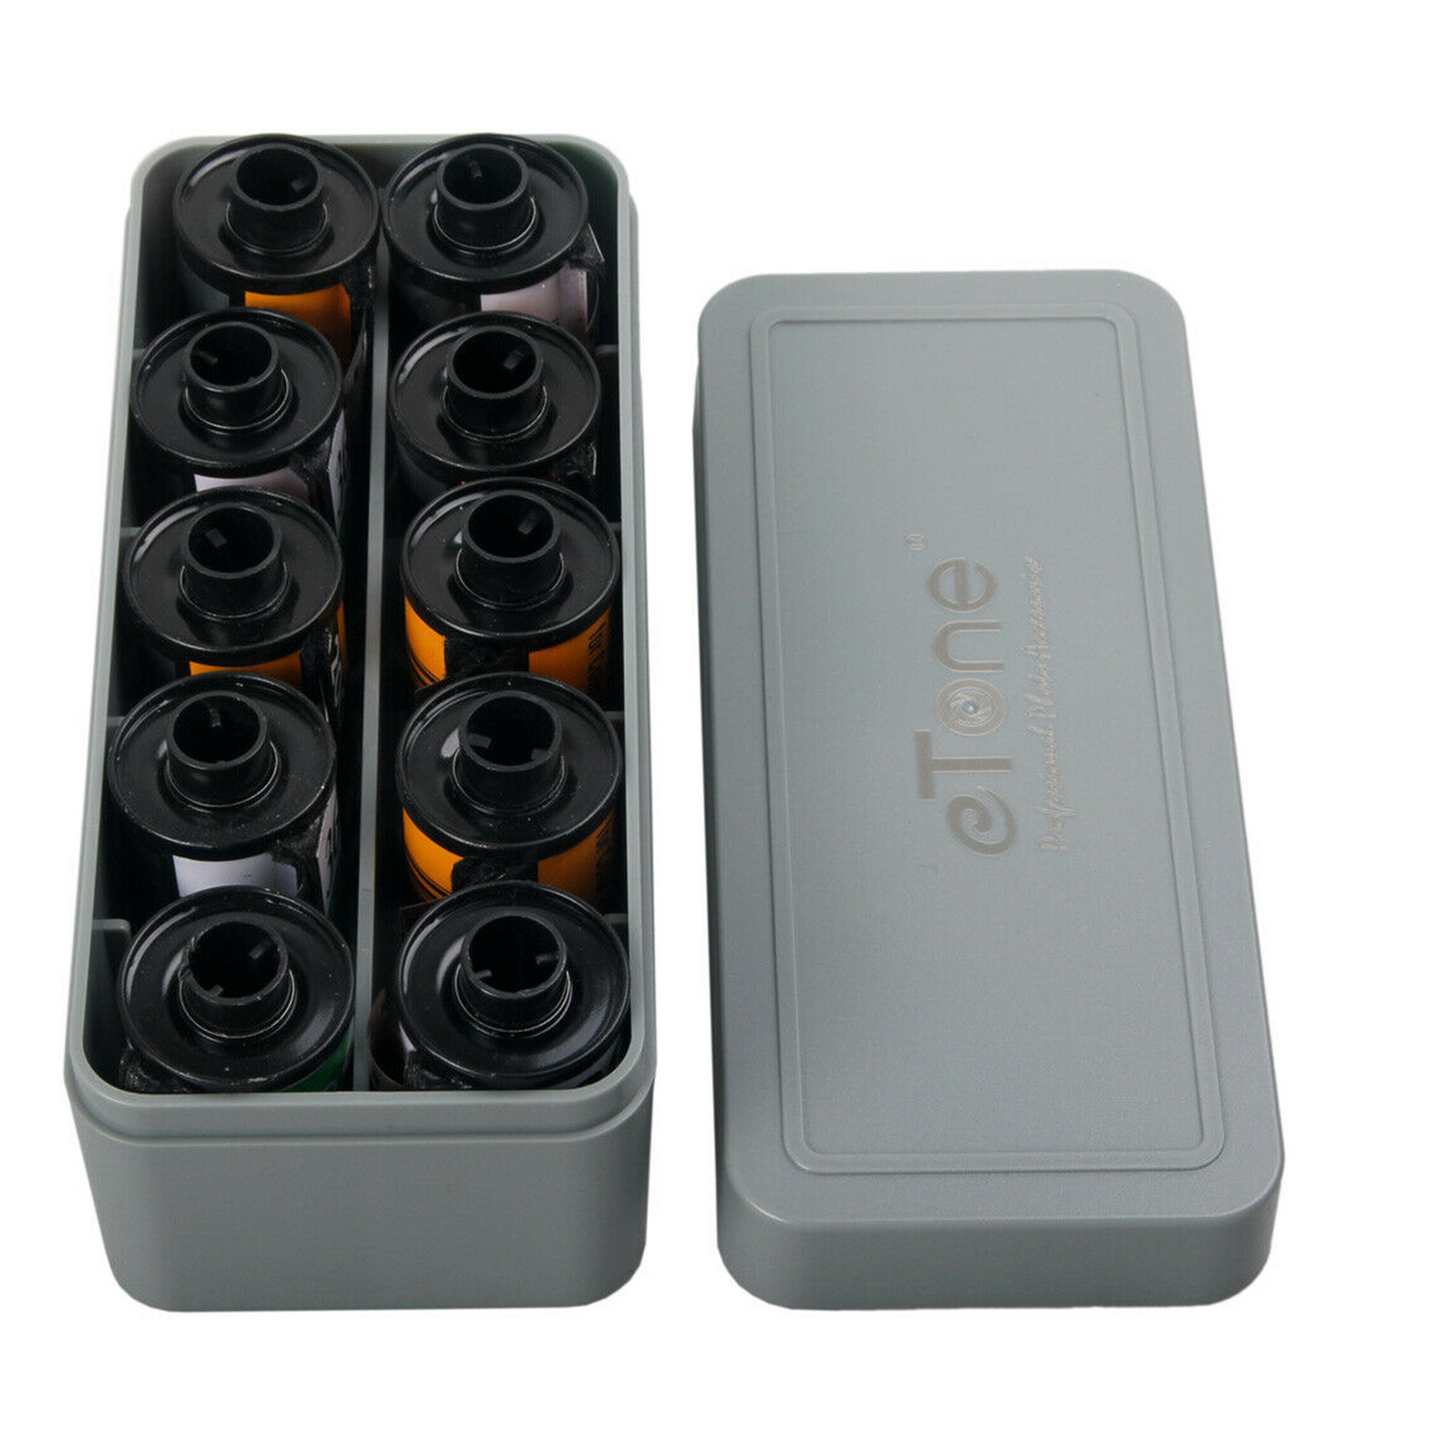 120 220 135 Black Multi-Format Film Container Case Storage Carrying Box for Ilford Kodak Negative Film